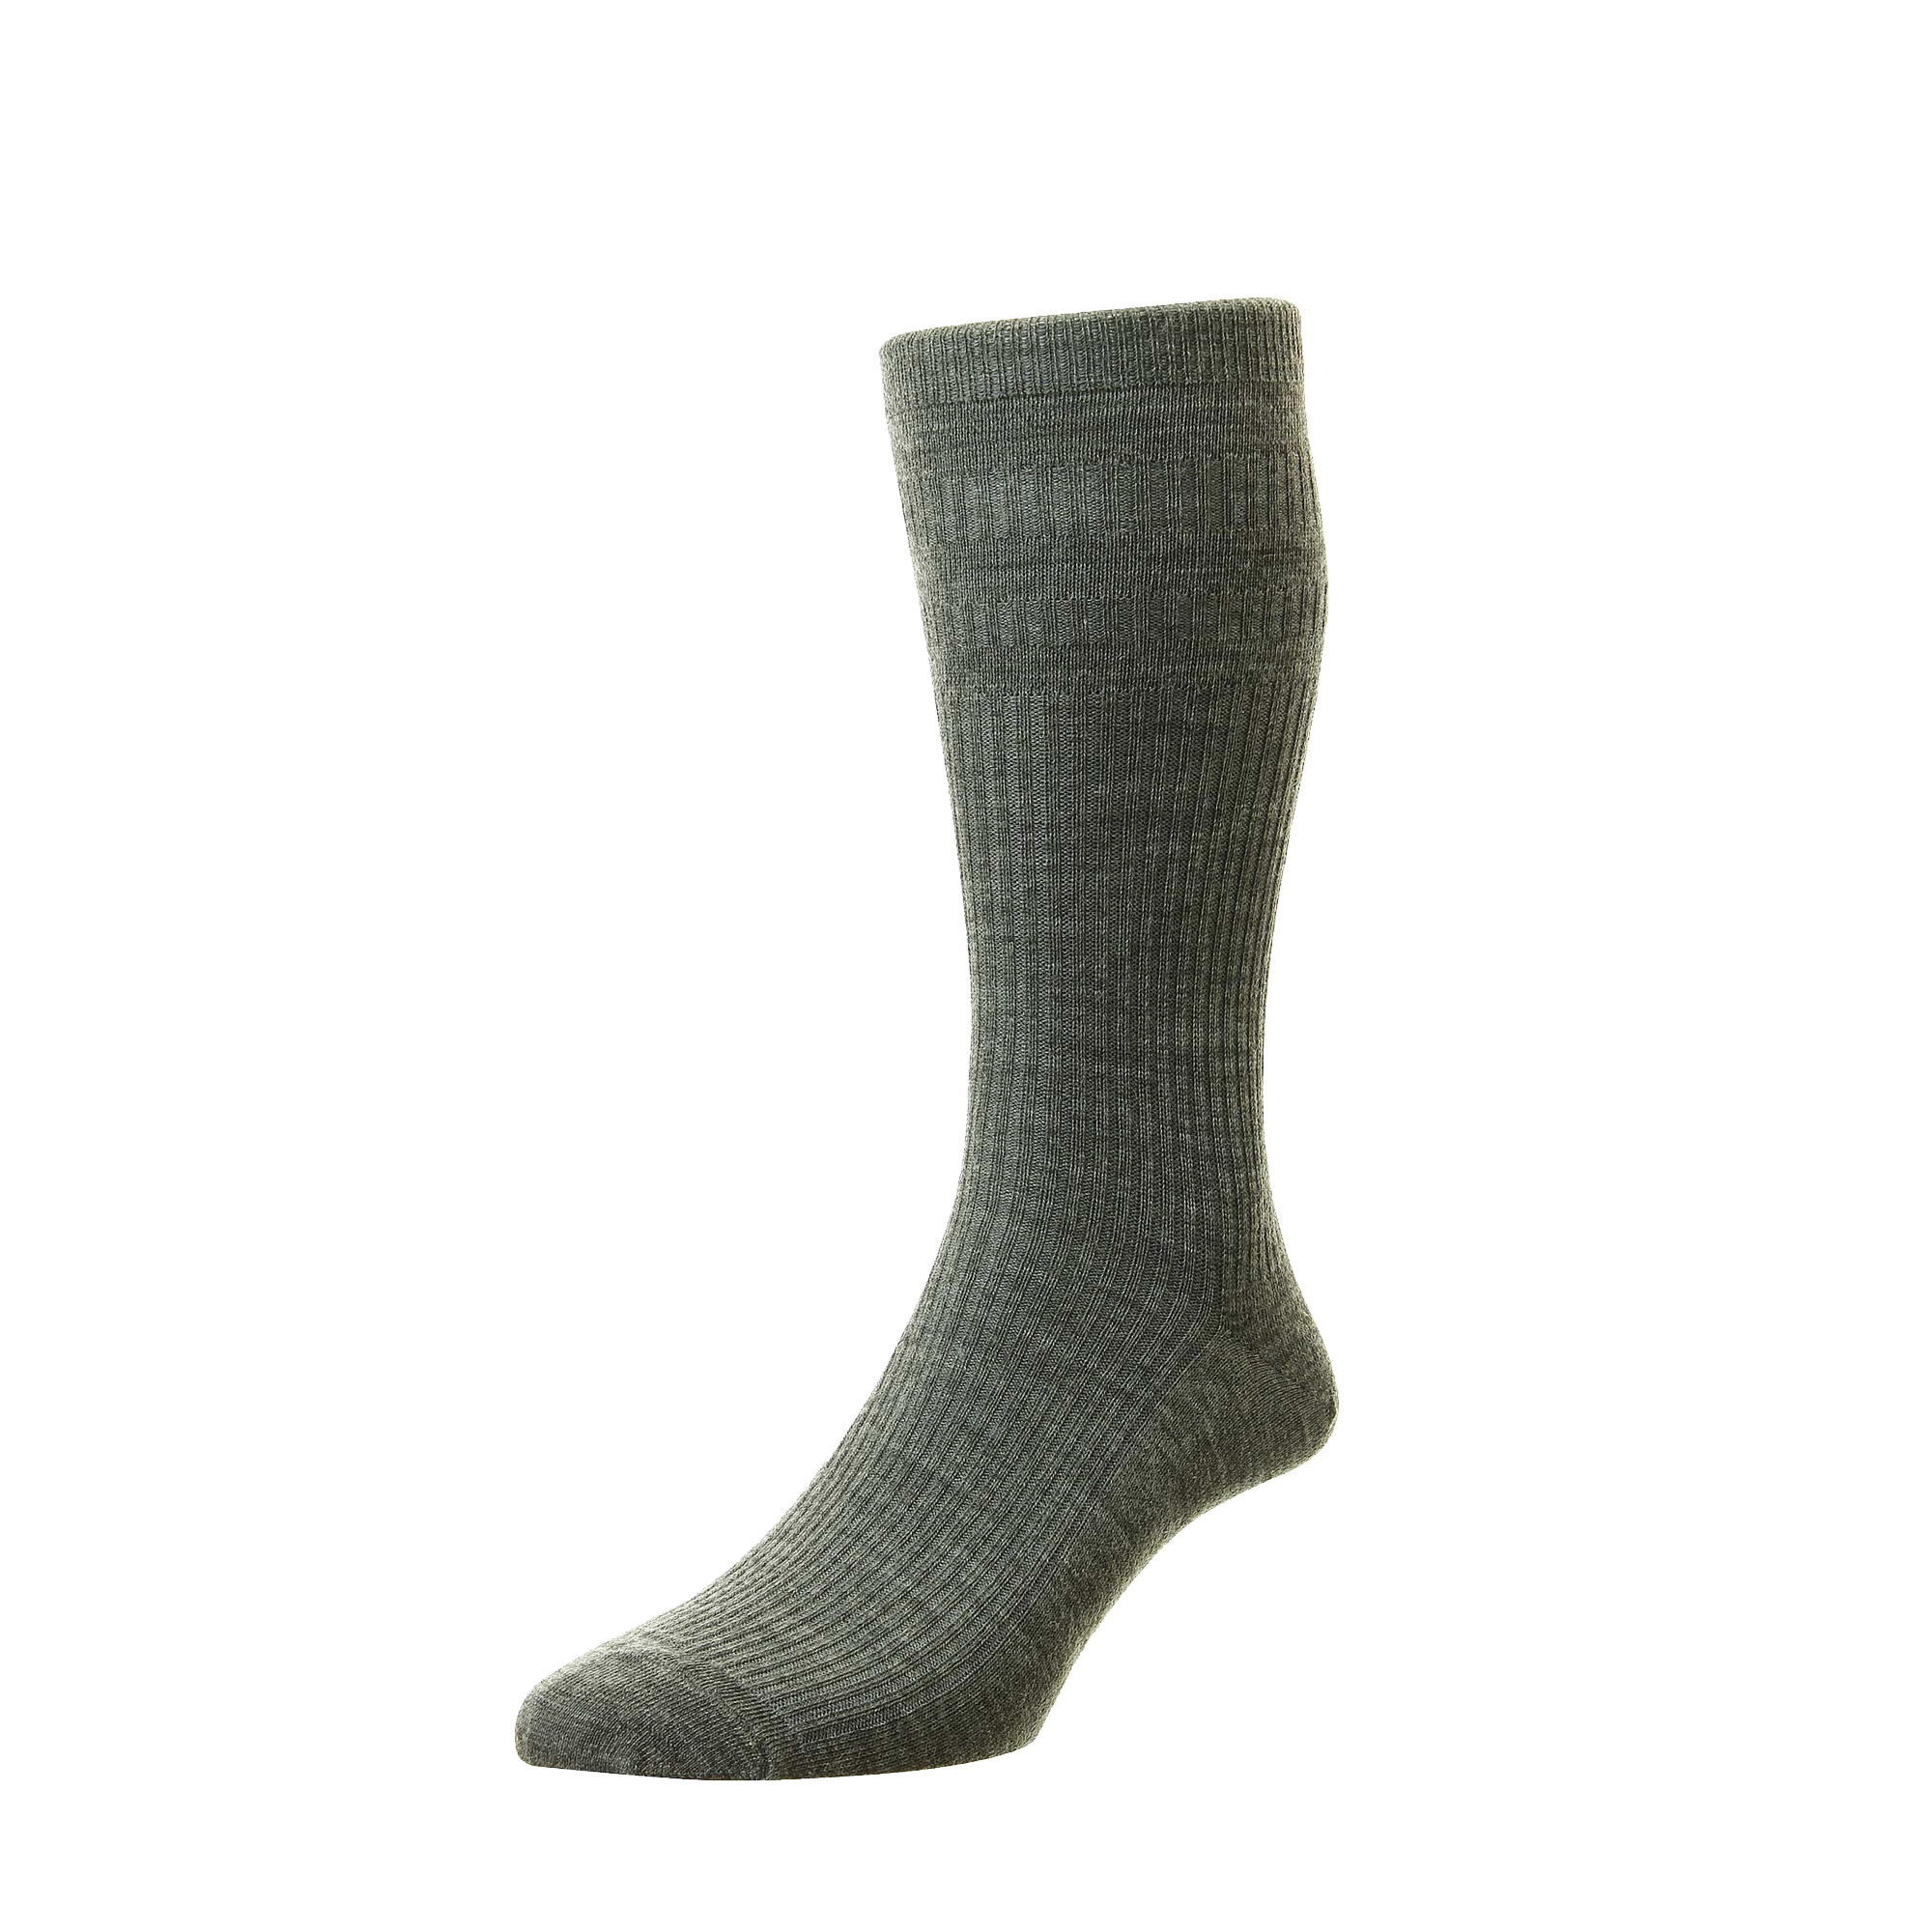 HJ Extra Wide Softop Socks - HJ191H - Cotton - Mid Grey